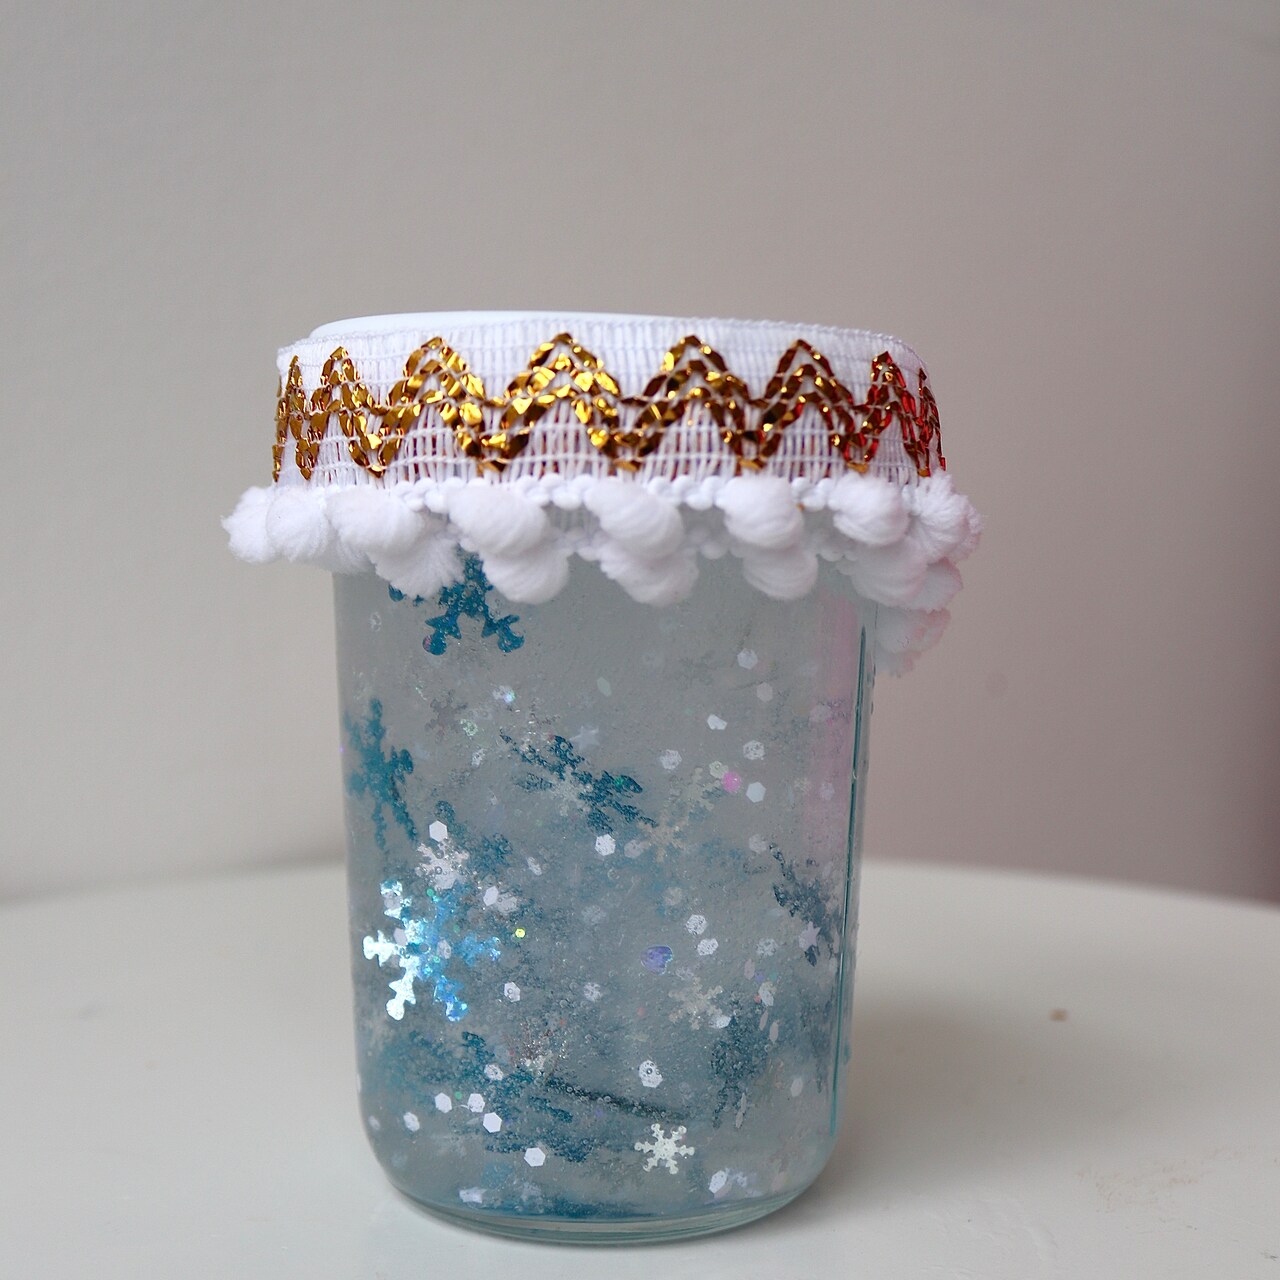 Kids Club: Elmer's® Squishies Ornament and Snow Globe Sensory Bottle